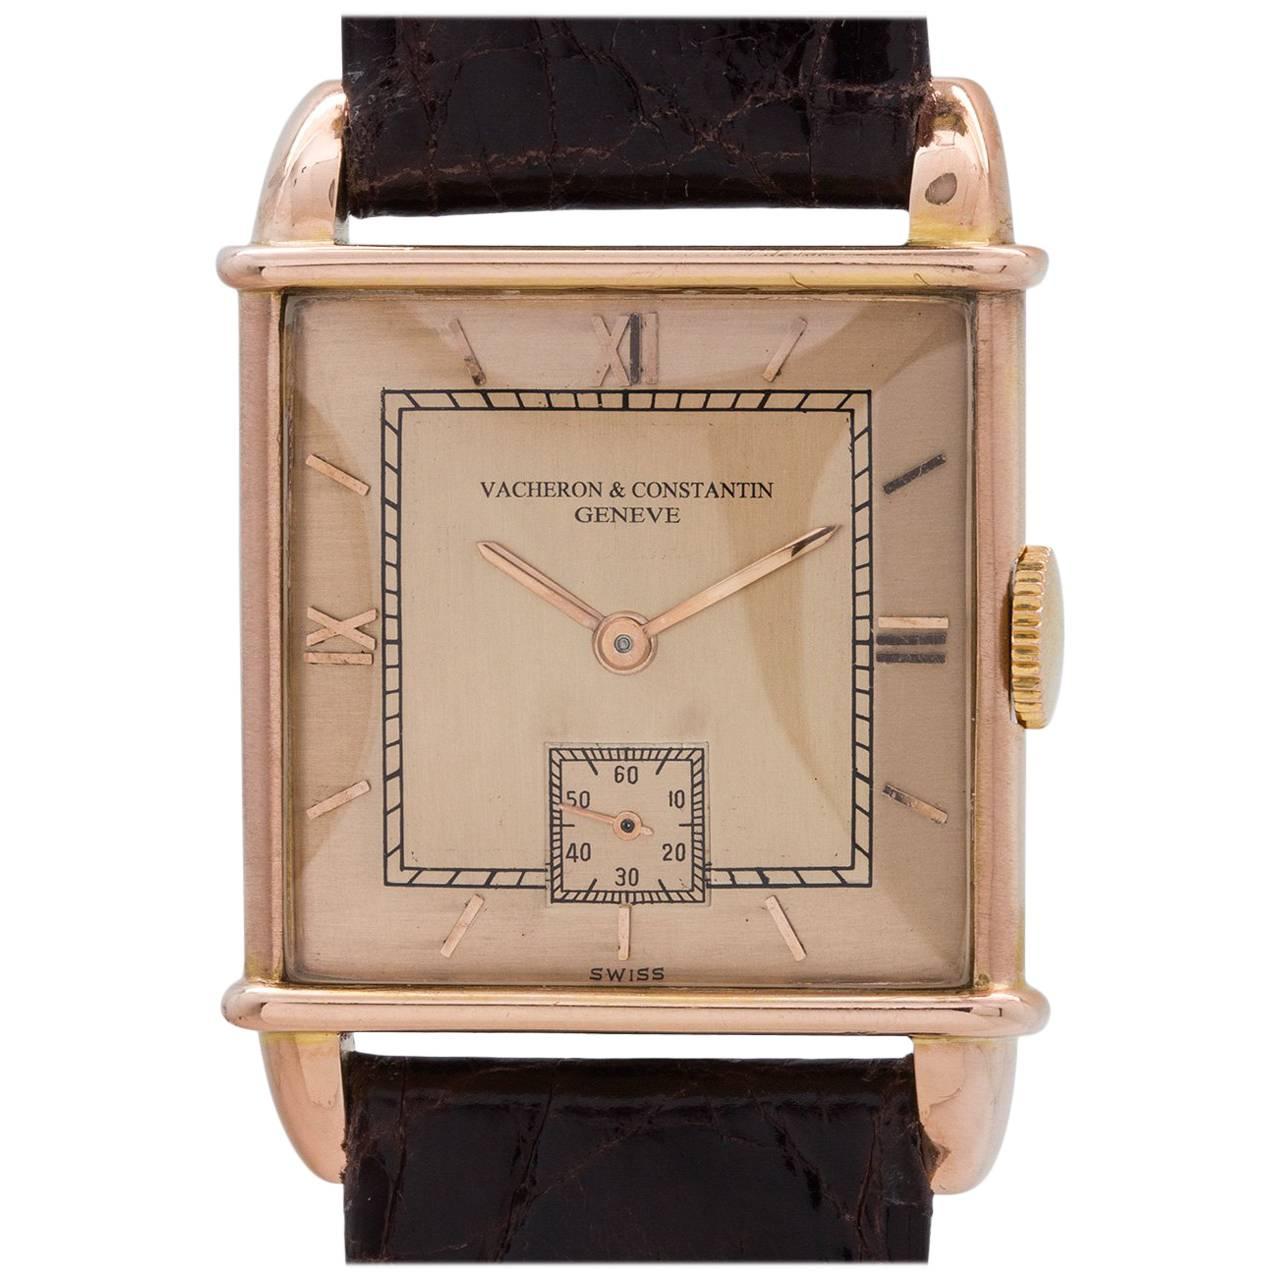 Vacheron & Constantin Pink Gold Manual Wind Dress Wristwatch circa 1940